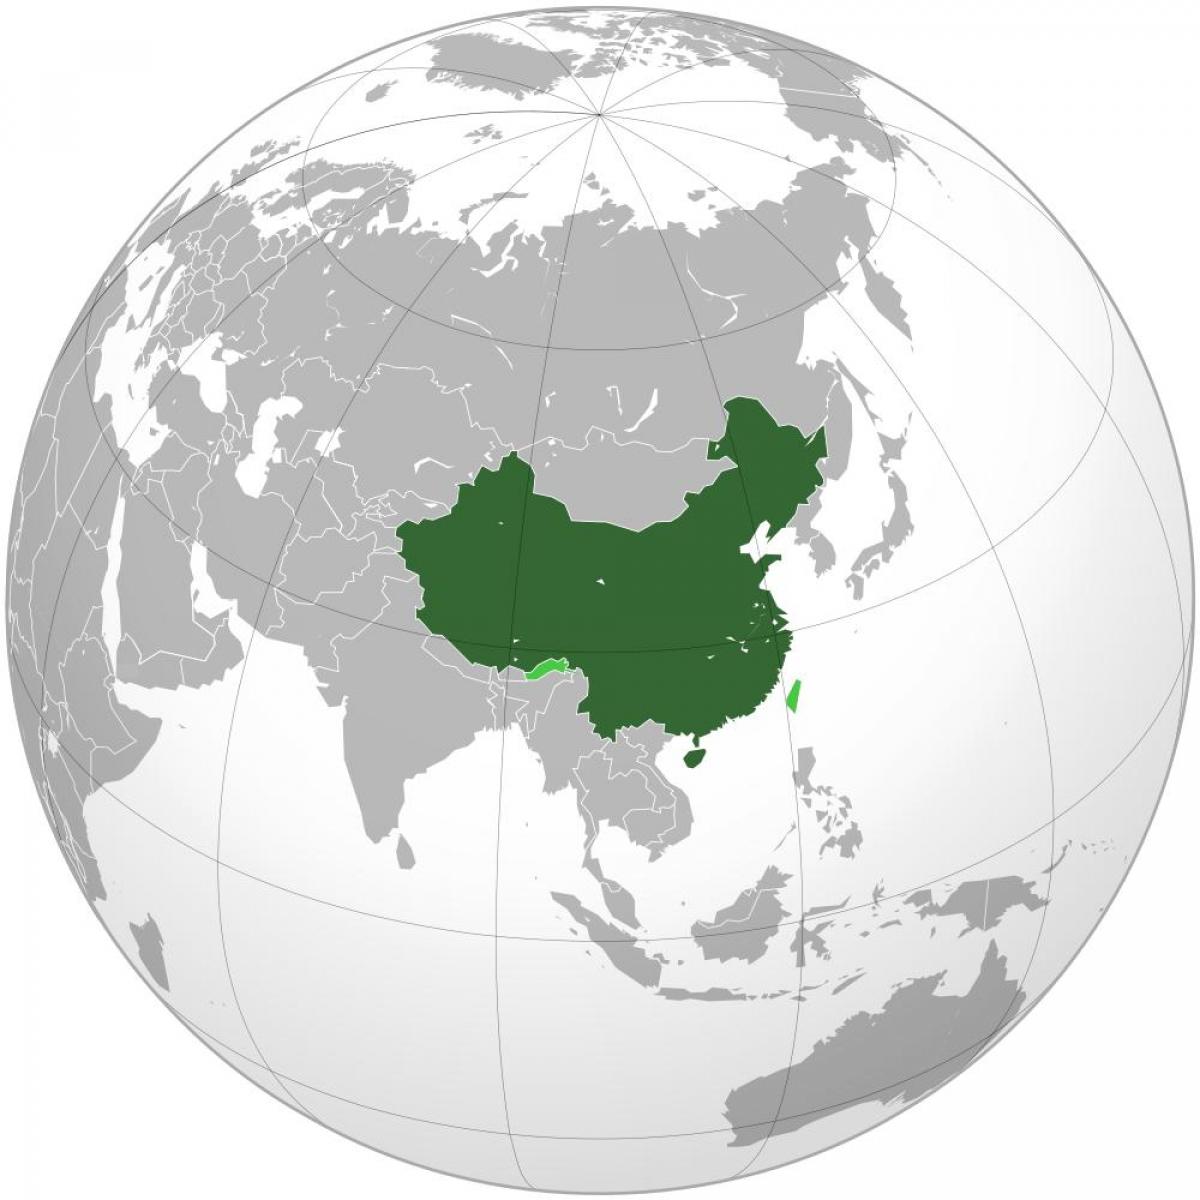 चीन दुनिया का नक्शा